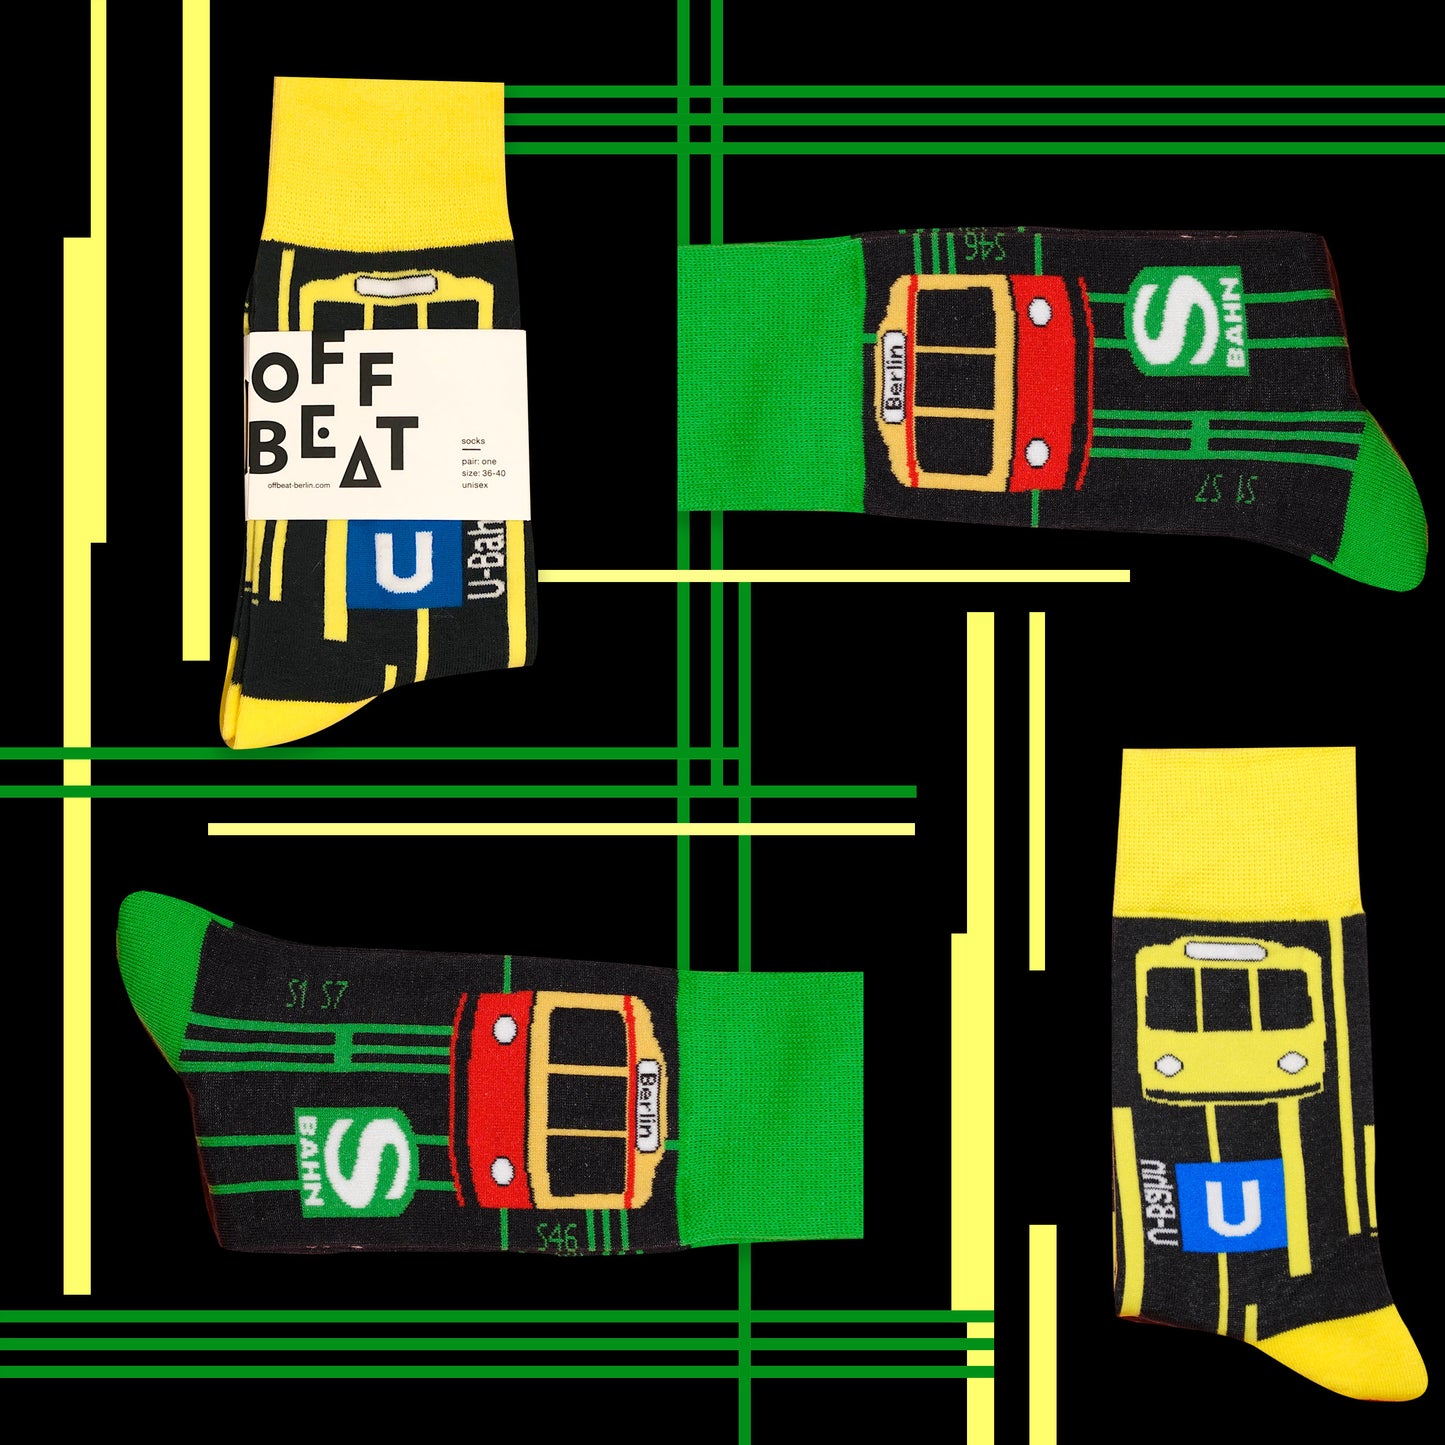 Berlin S-Bahn railroad socks